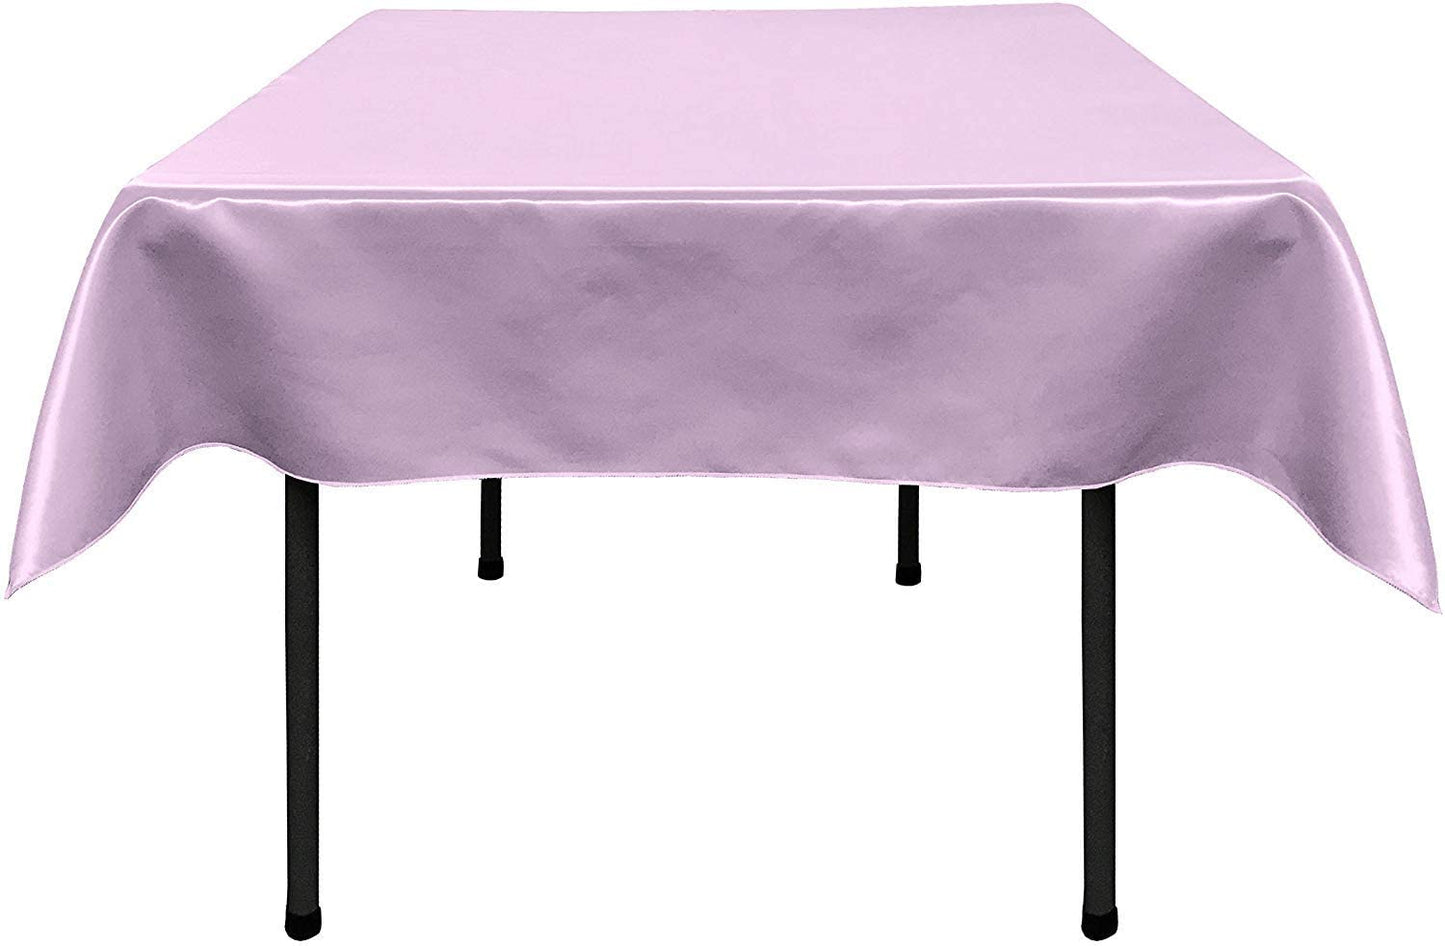 Polyester Bridal Satin Table Tablecloth (Lilac,